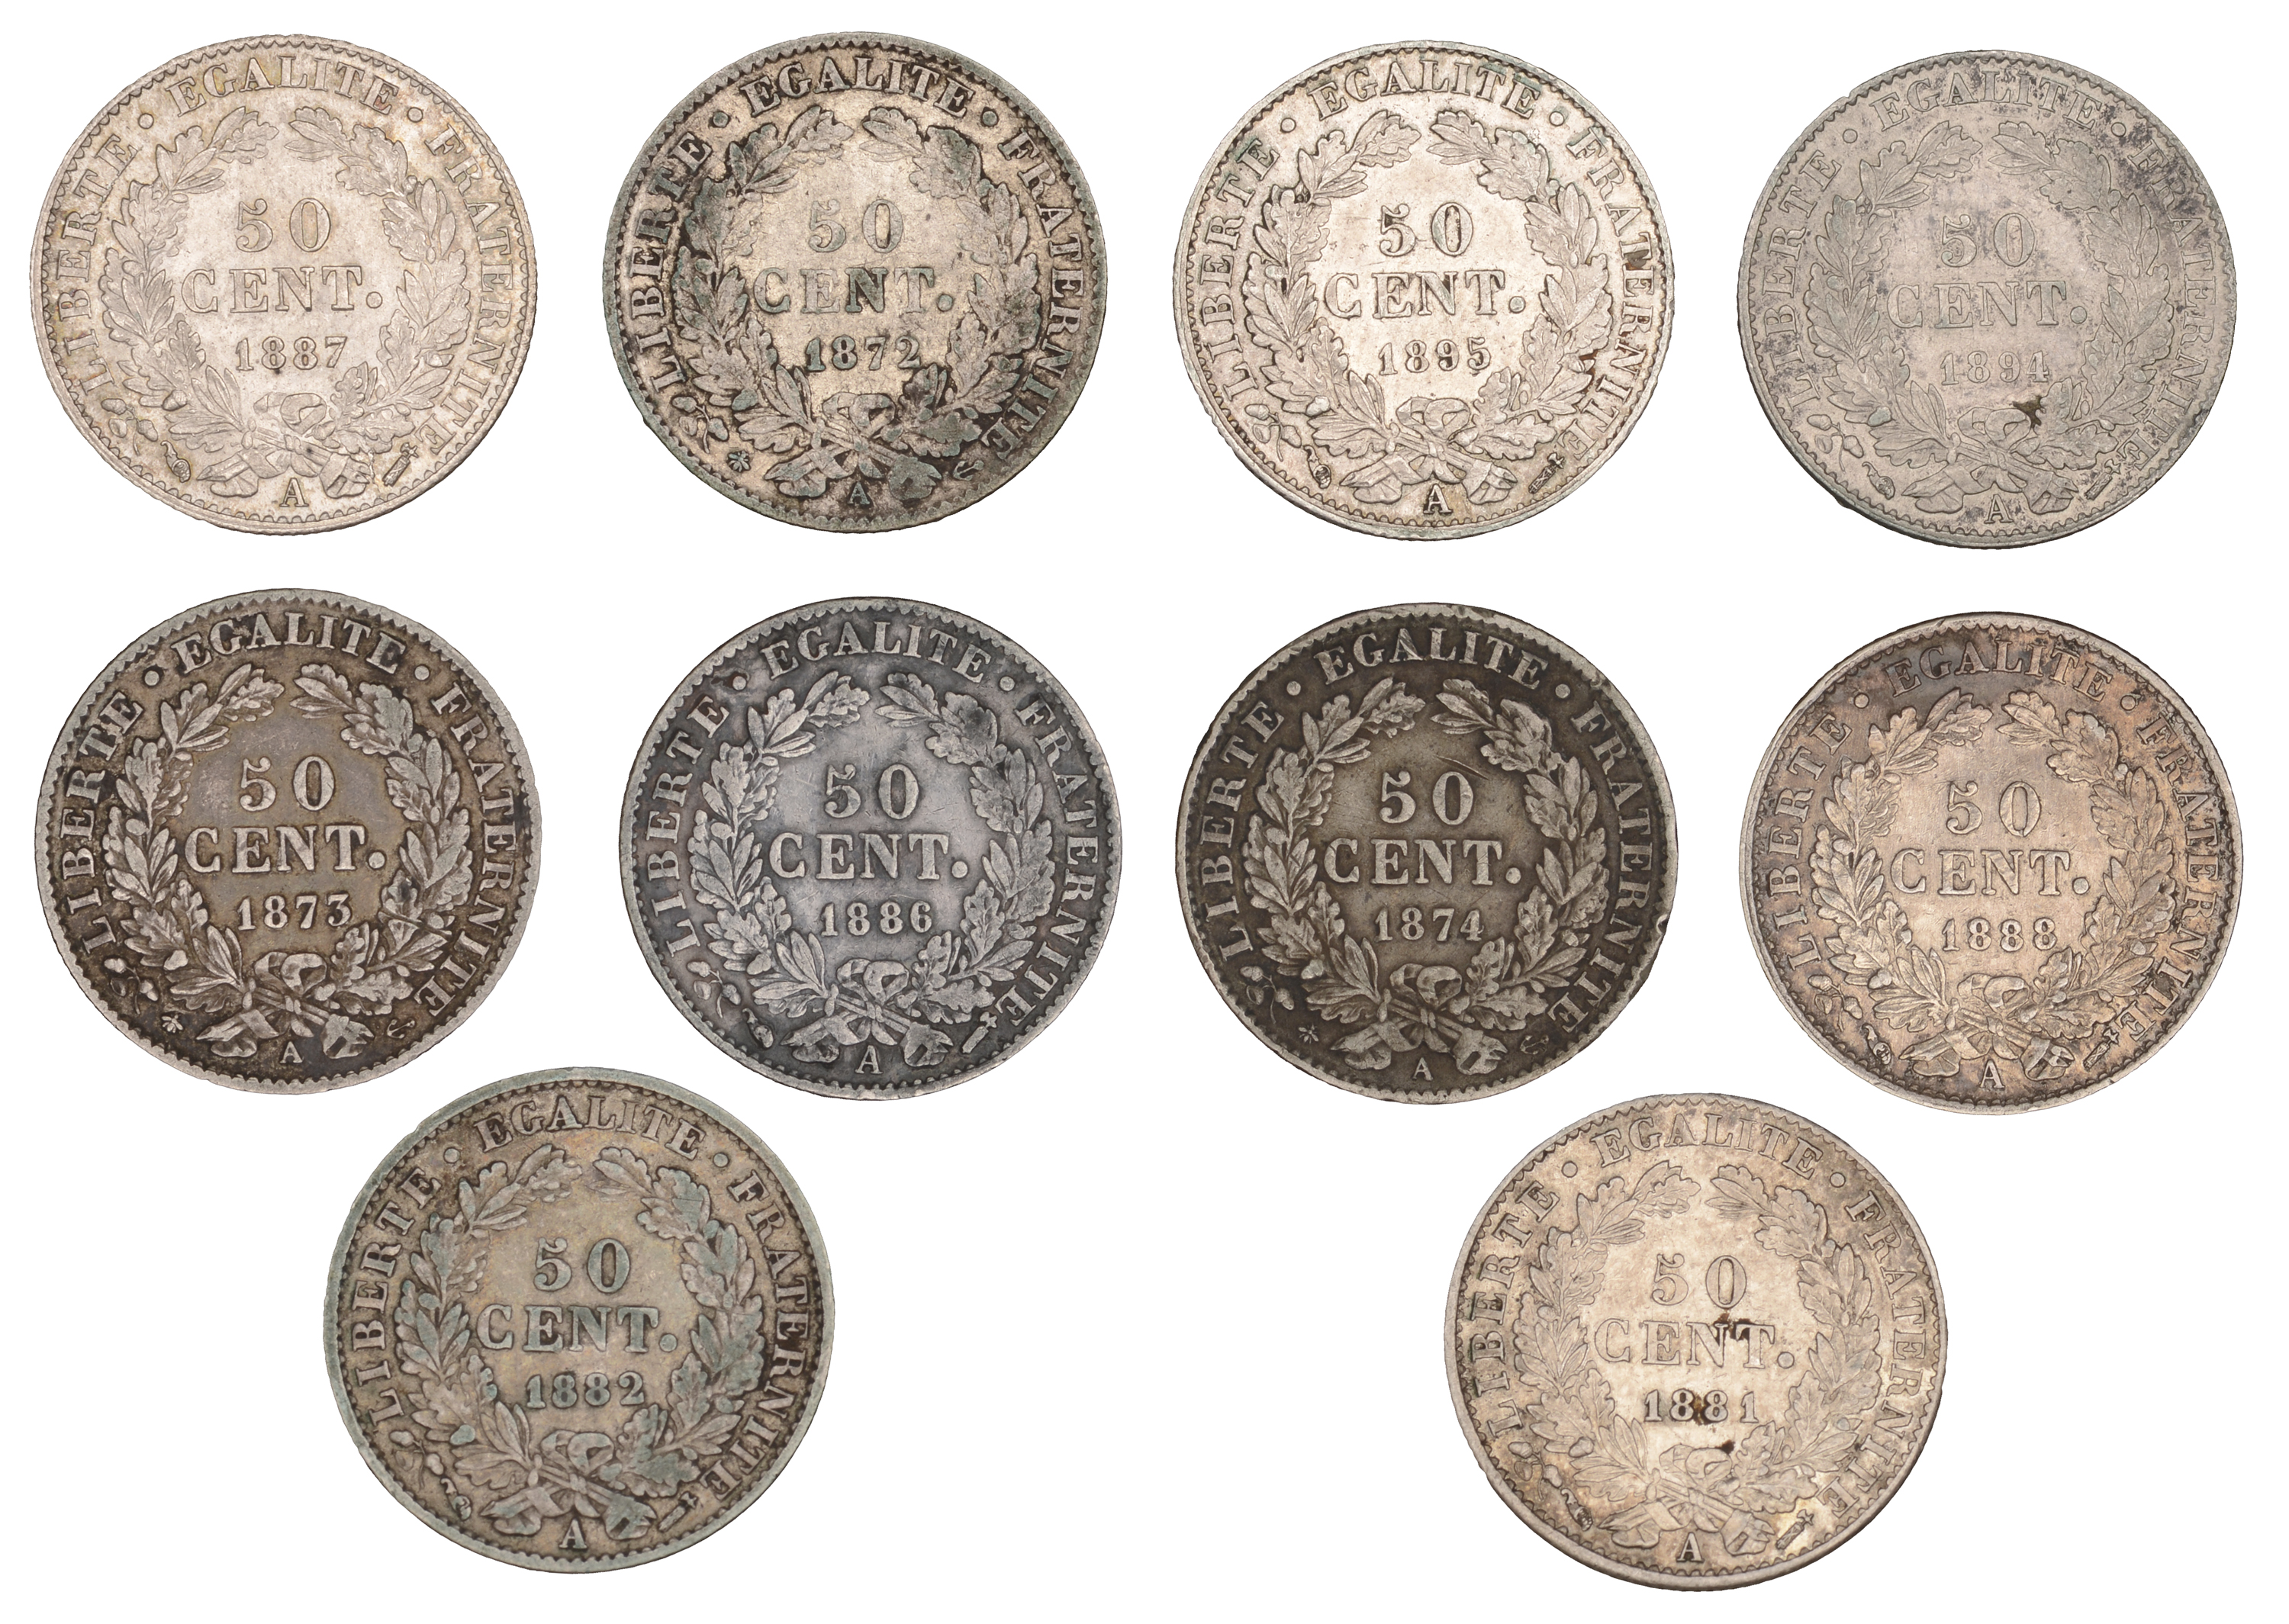 France, Third Republic (1871-1940), 50 Centimes (10), 1872a, 1873a, 1874a, 1881a, 1882a, 188... - Image 2 of 2